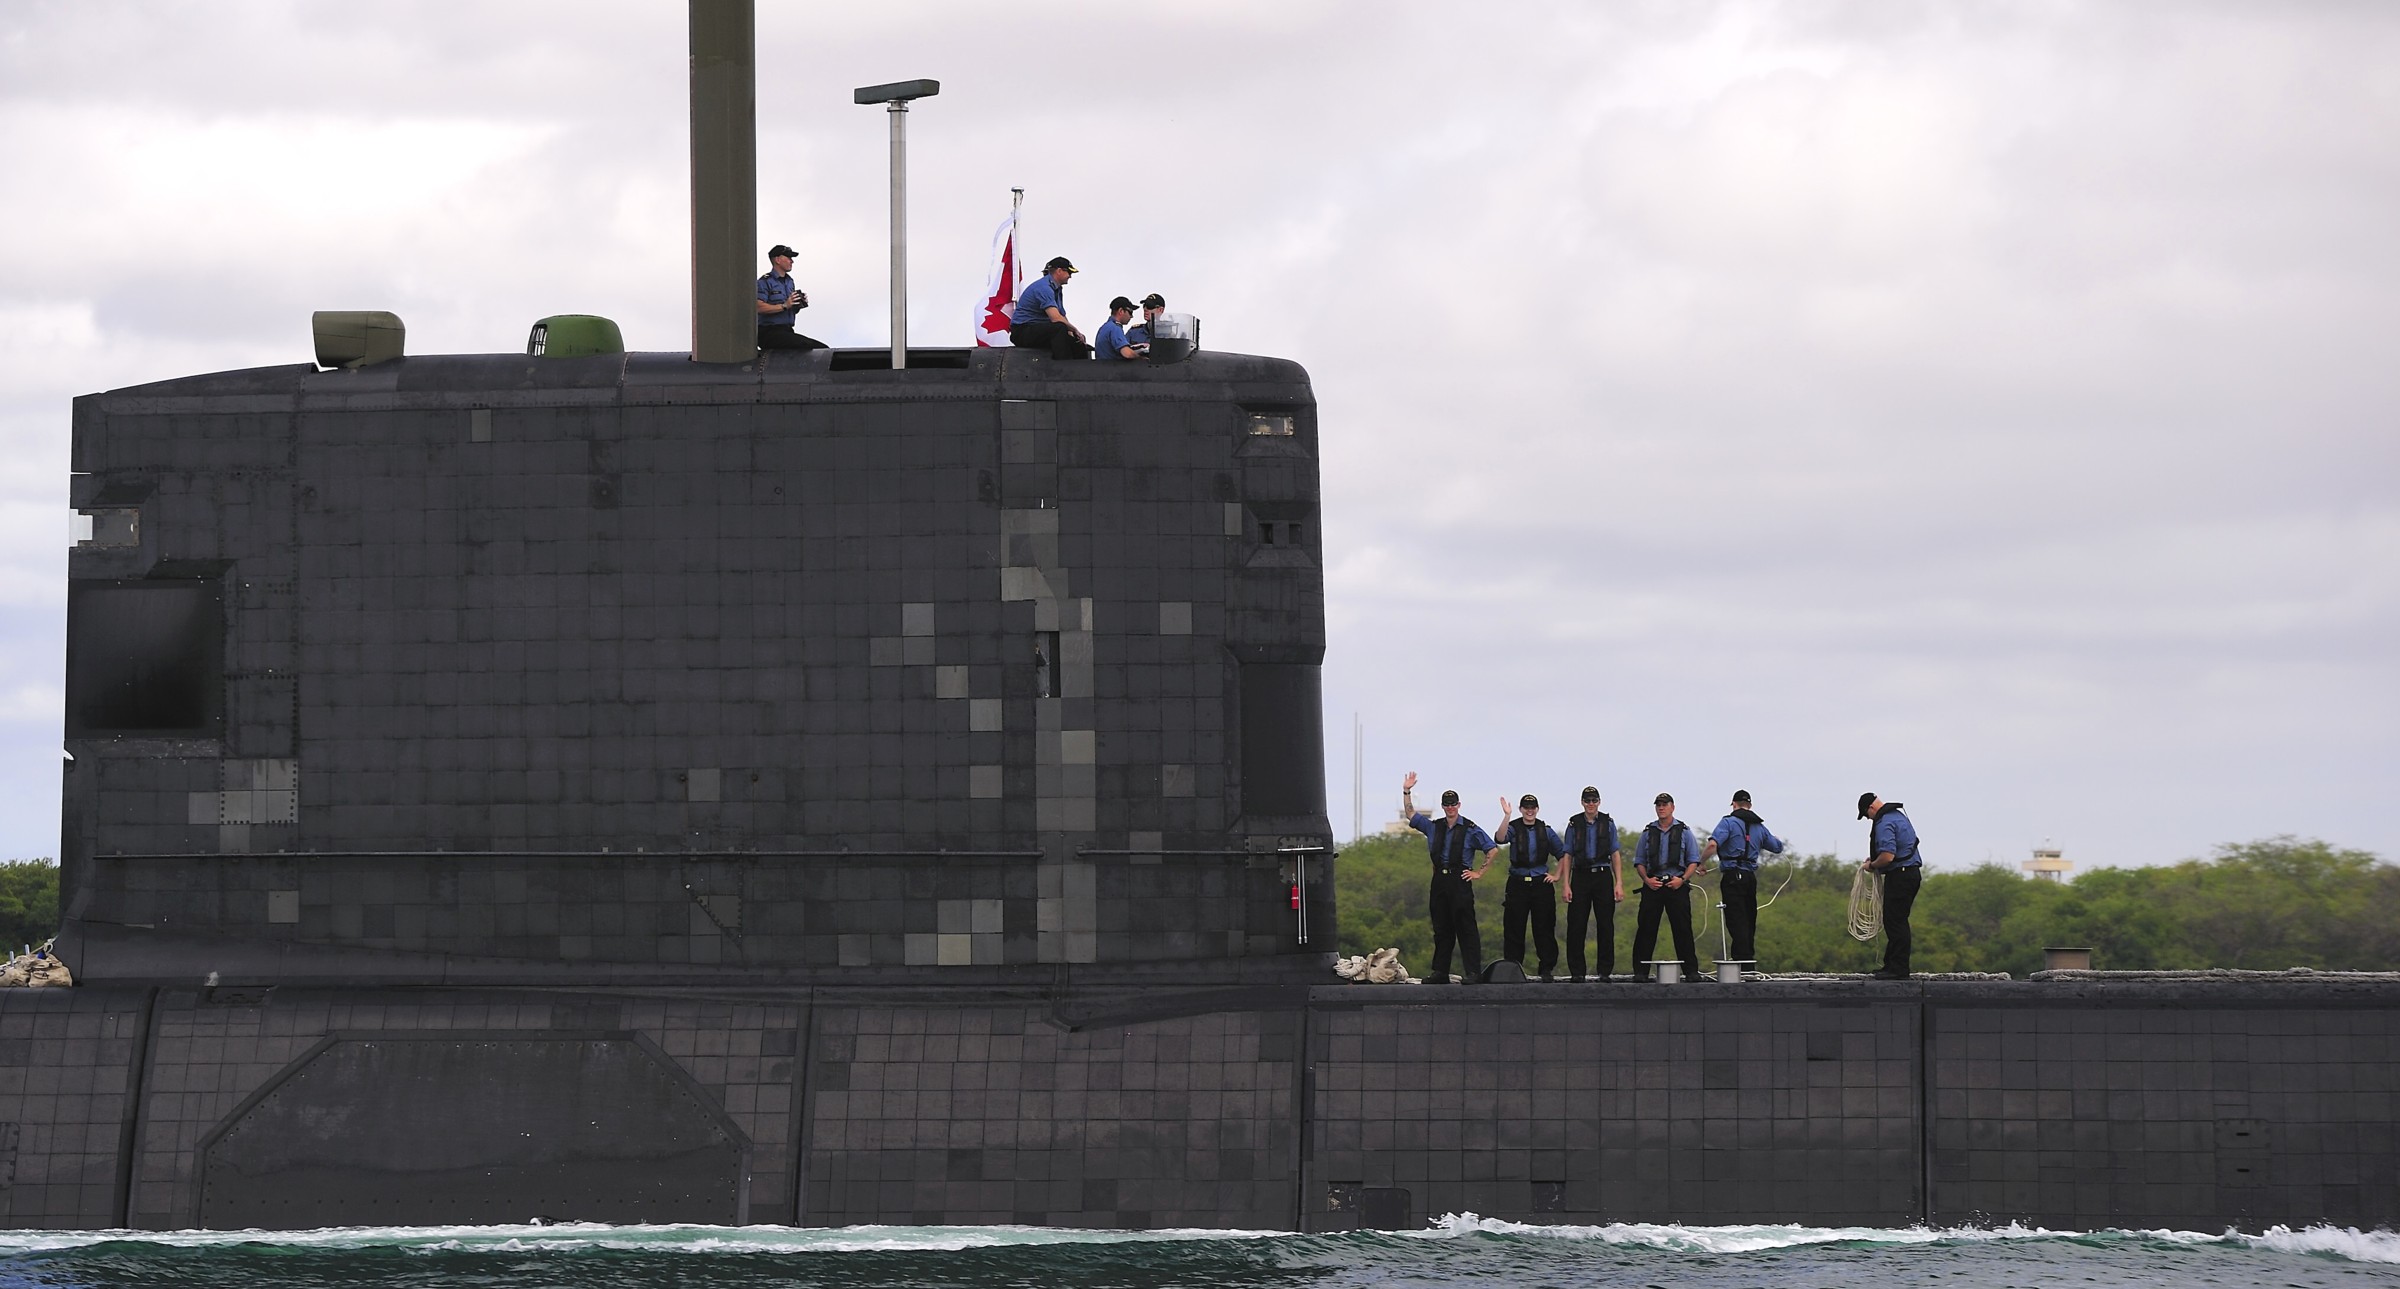 ssk-876 hmcs victoria upholder class attack submarine hunter killer ncsm royal canadian navy 38